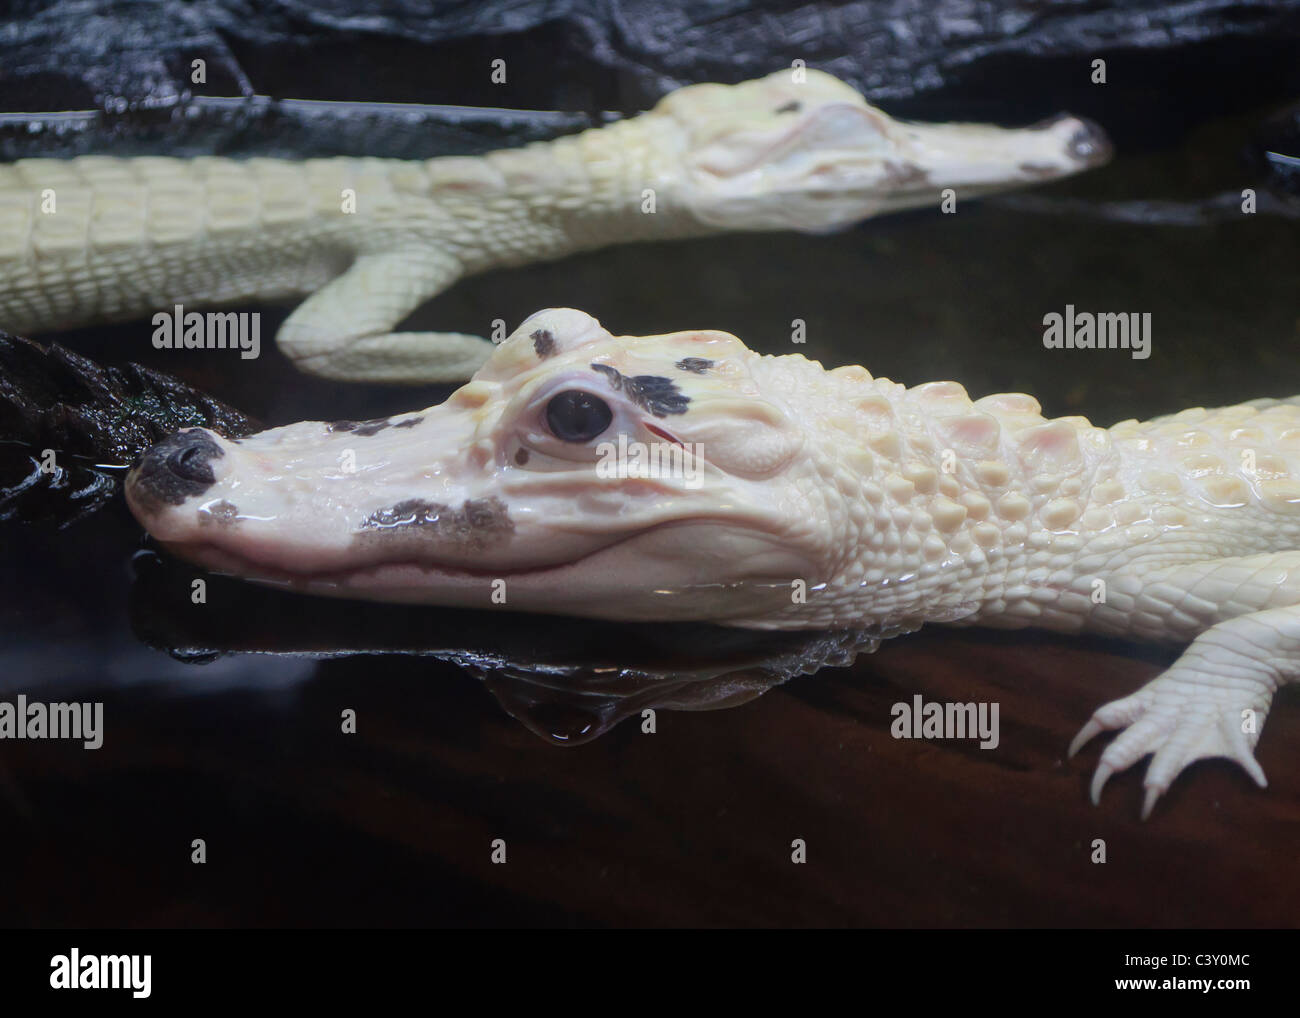 Two Baby Albino Alligators in Water Stock Photo